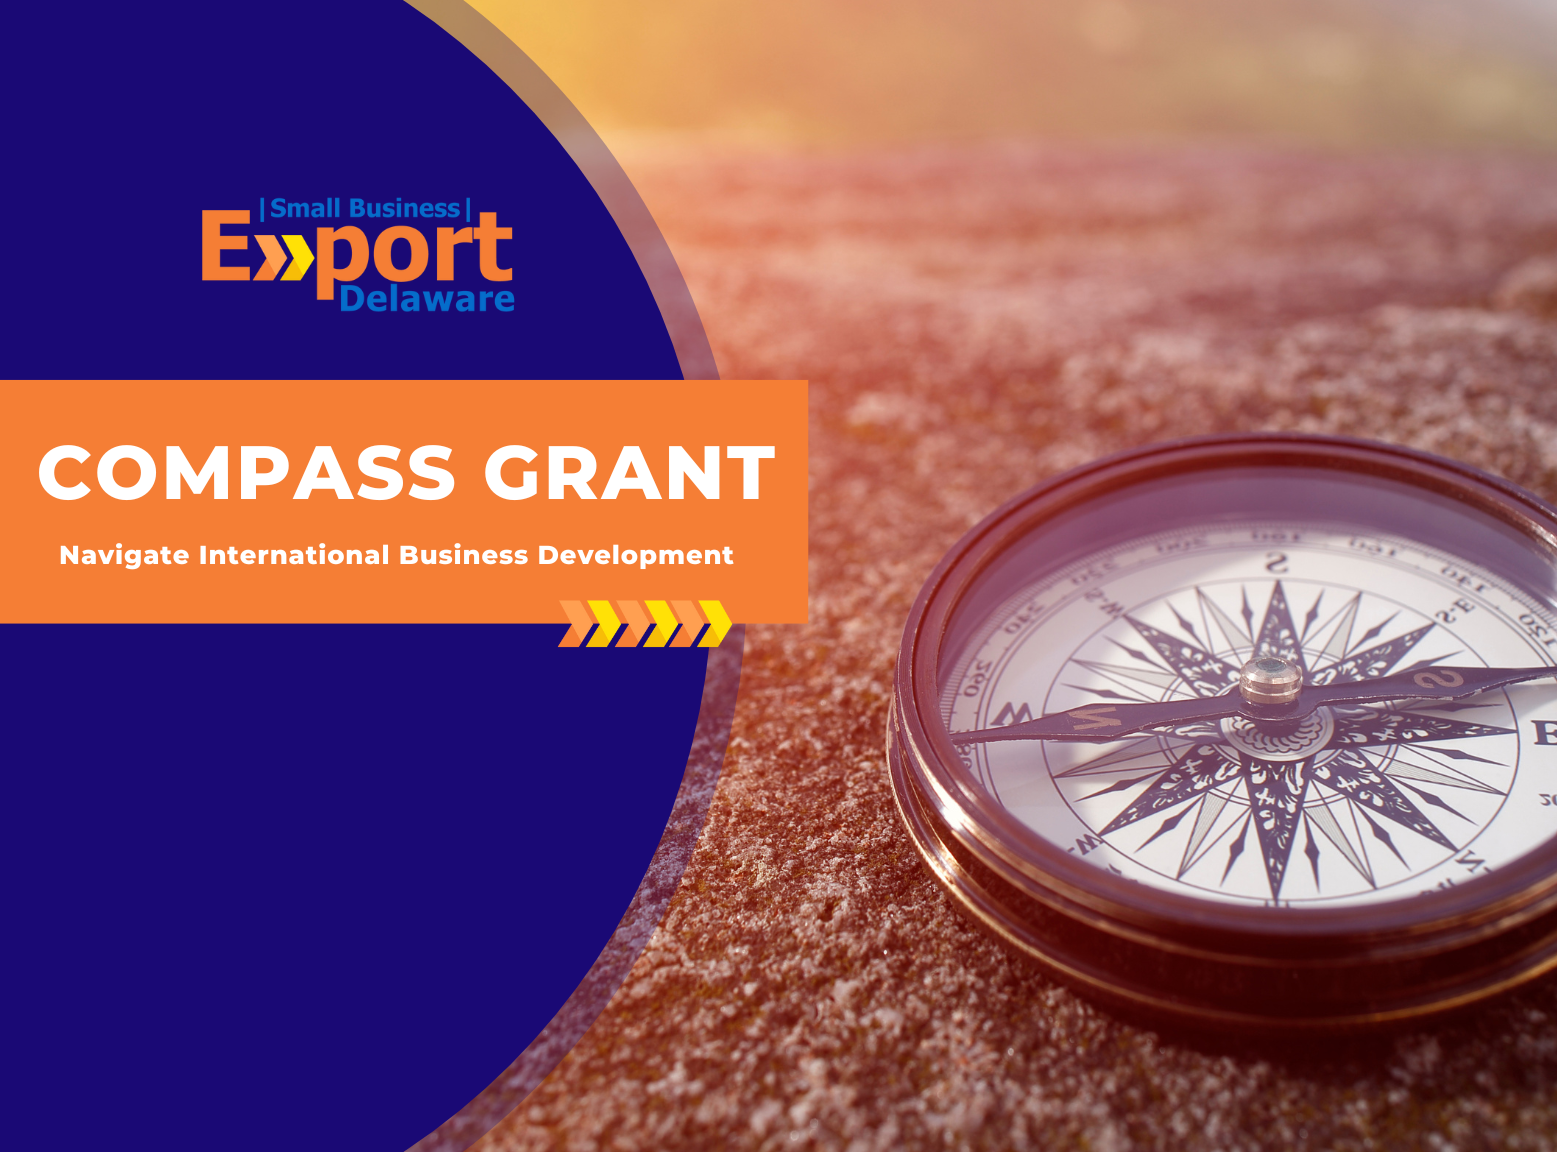 Brand-new Compass Grant